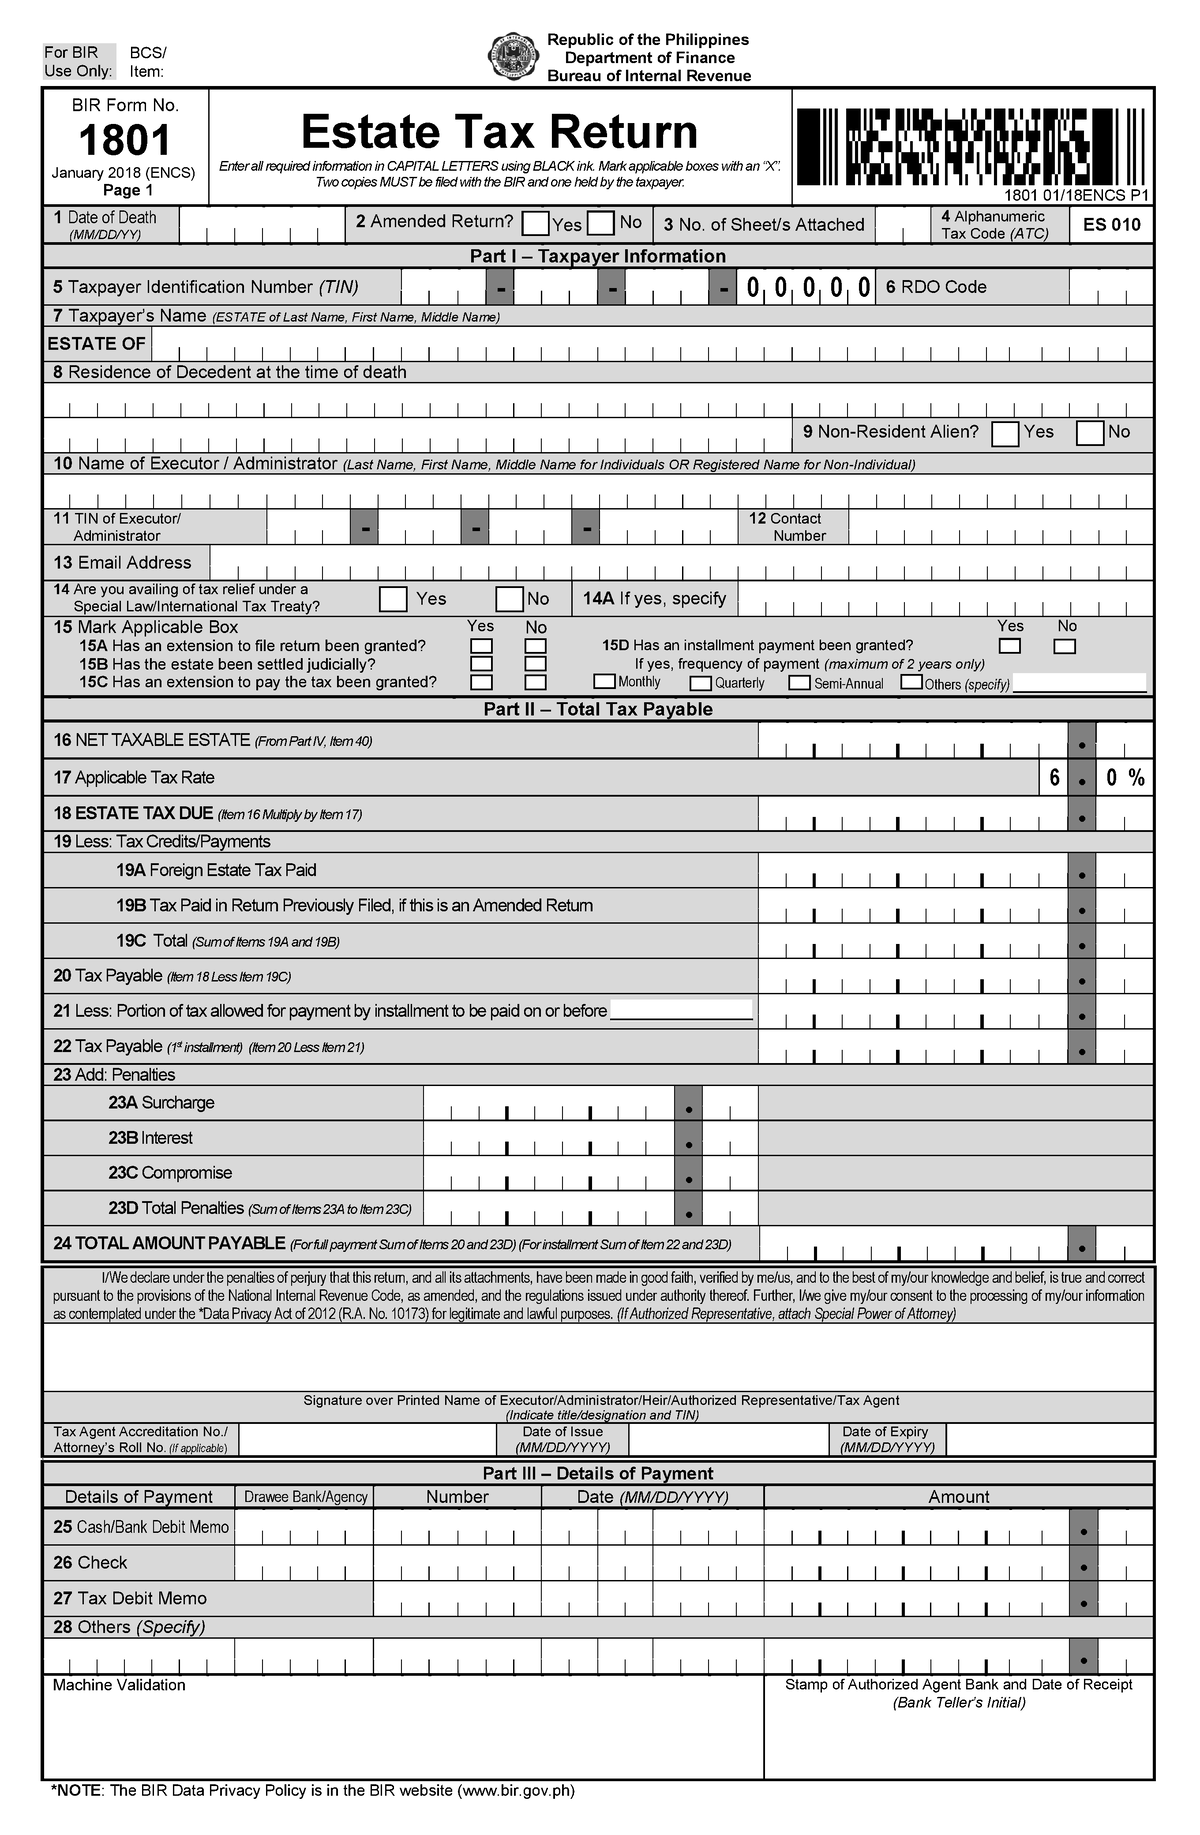 estate-tax-return-form-sample-for-bir-use-only-bcs-item-bir-form